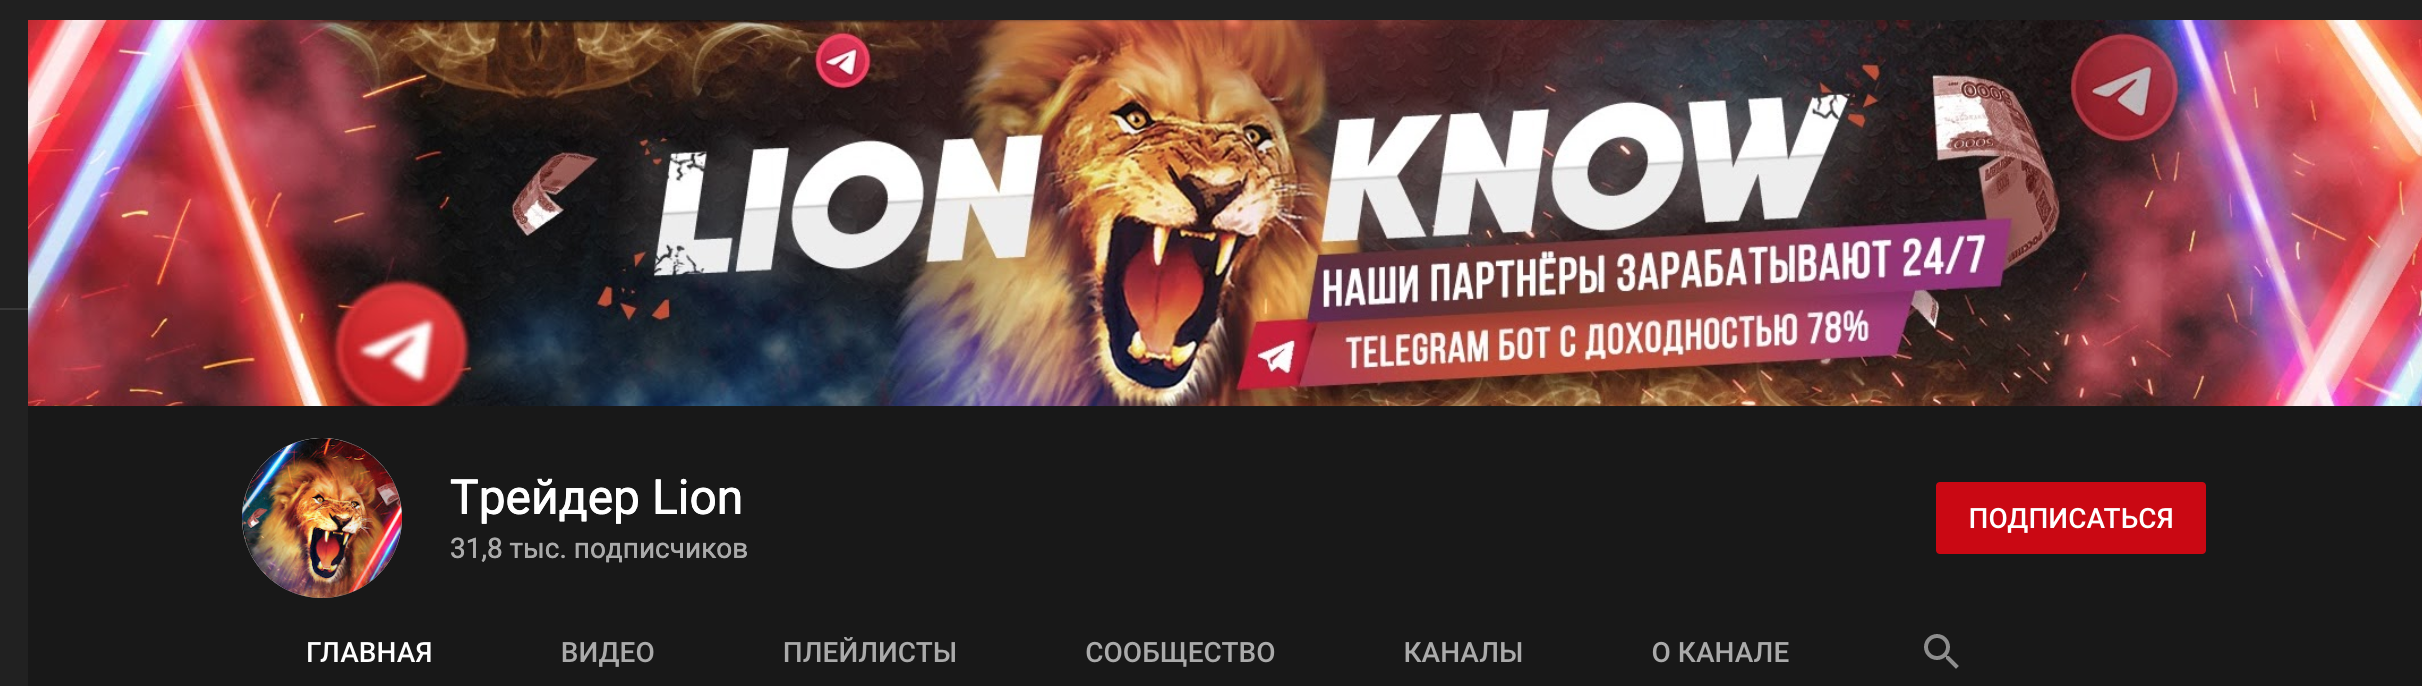 Ютуб канал Lion Know